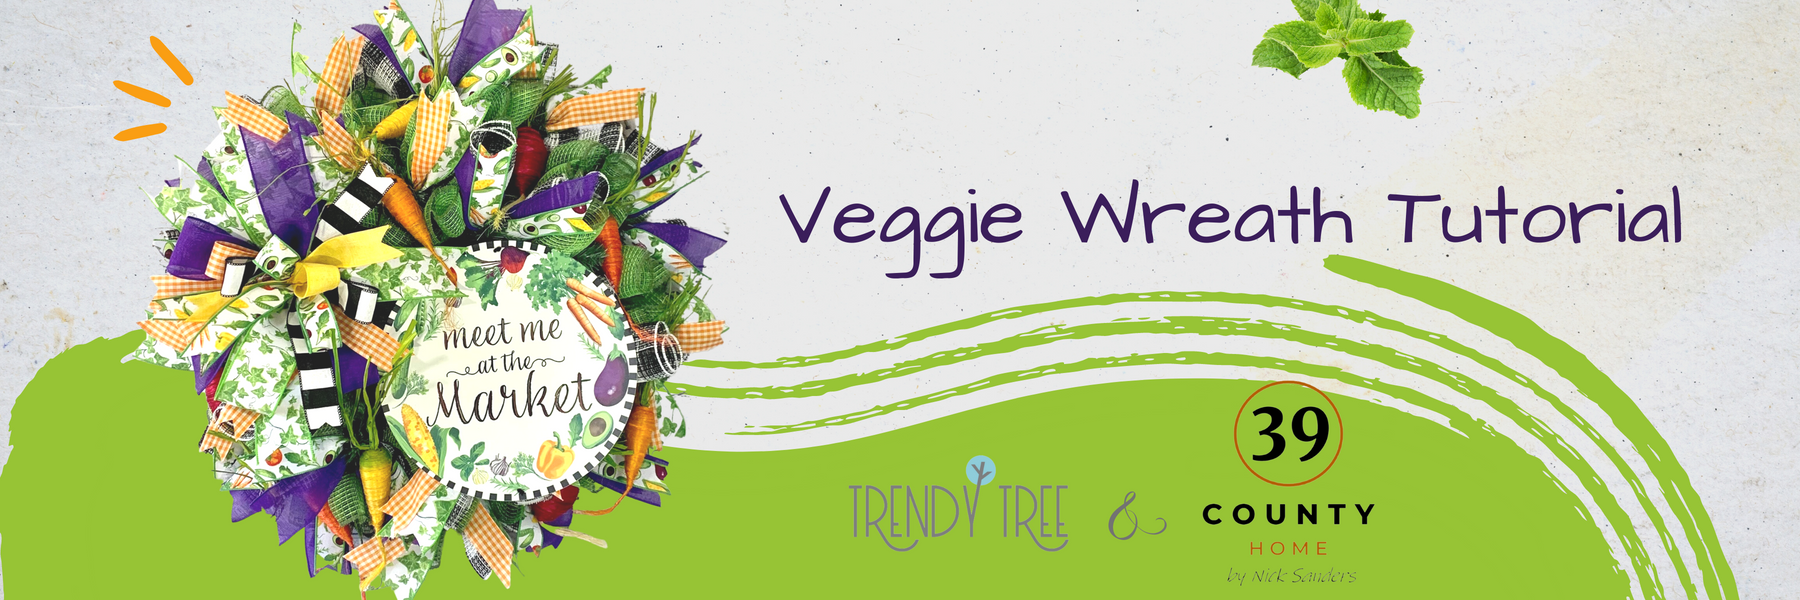 veggie wreath tutorial